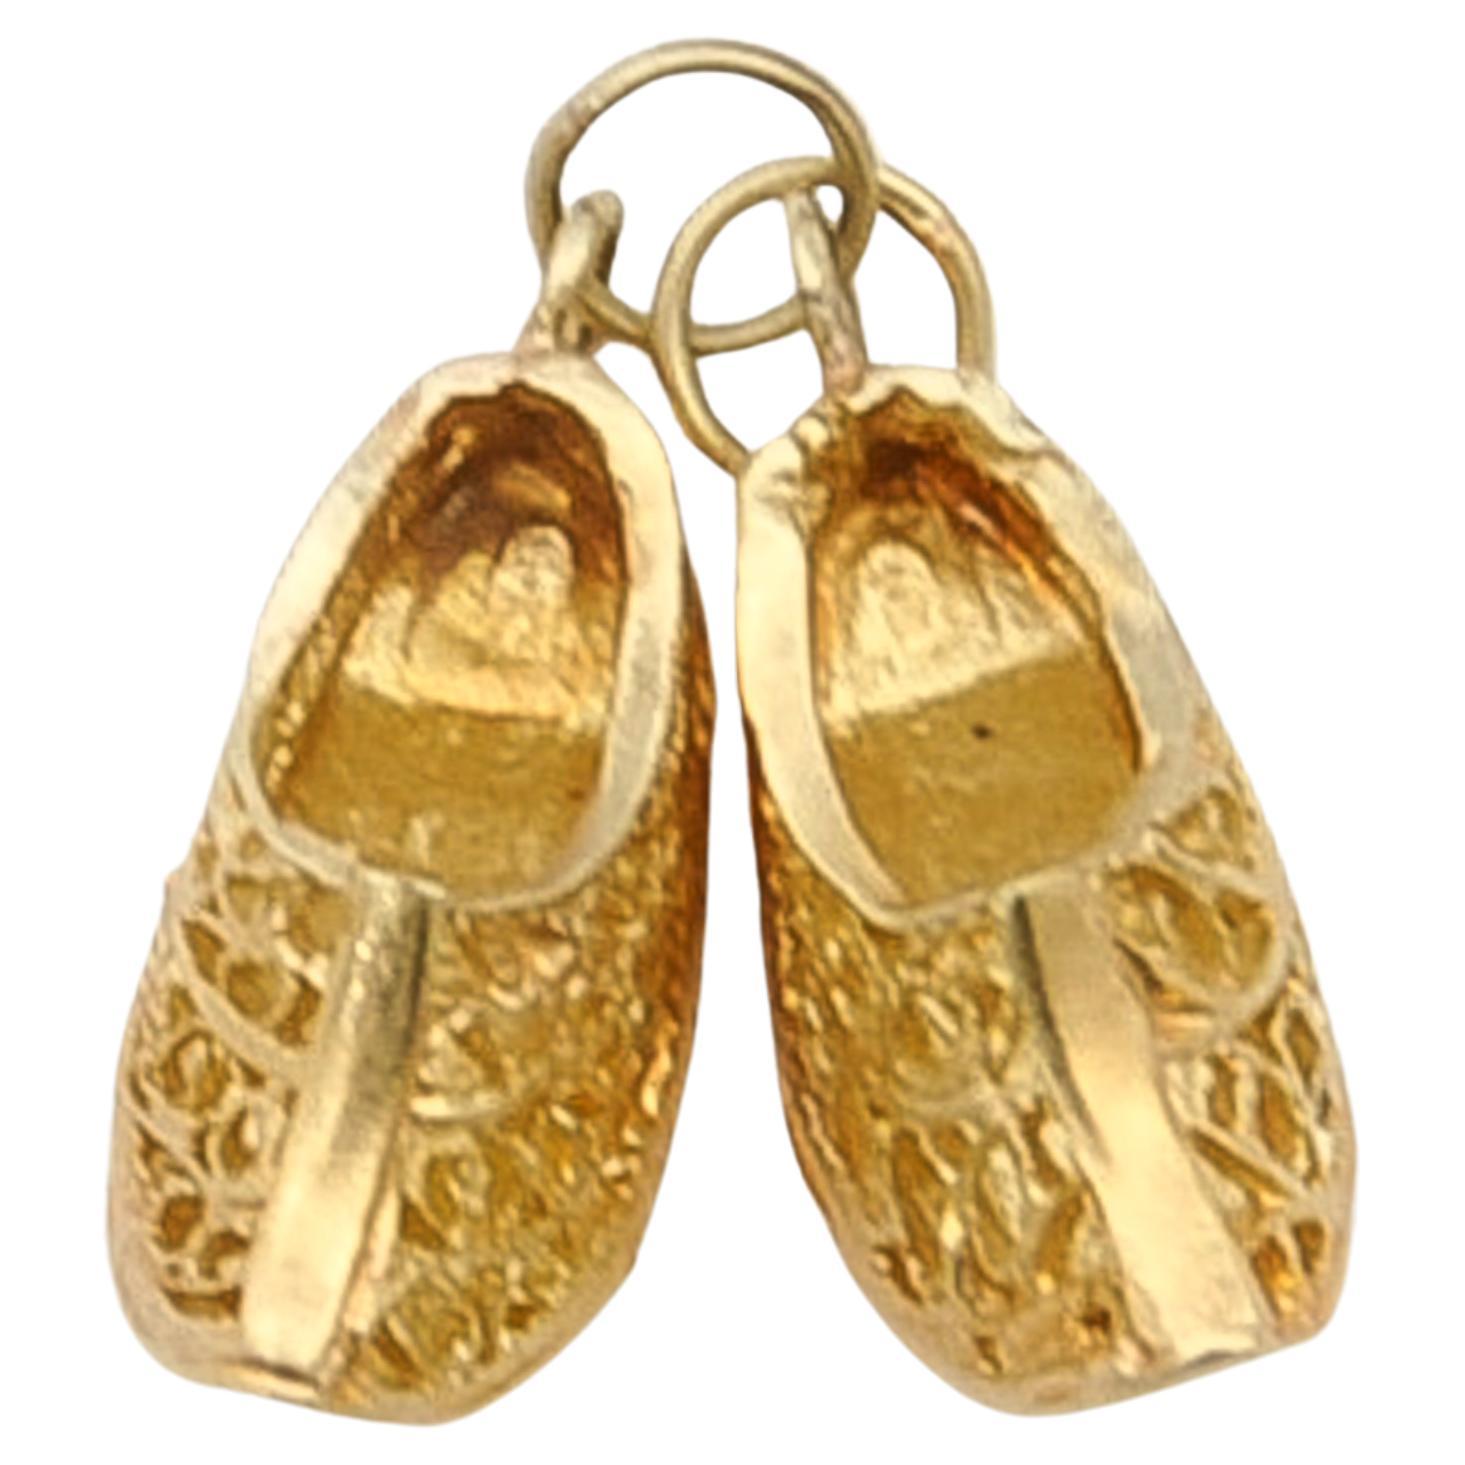 Vintage Dutch Clogs Filigree 14K Gold Charm Pendant